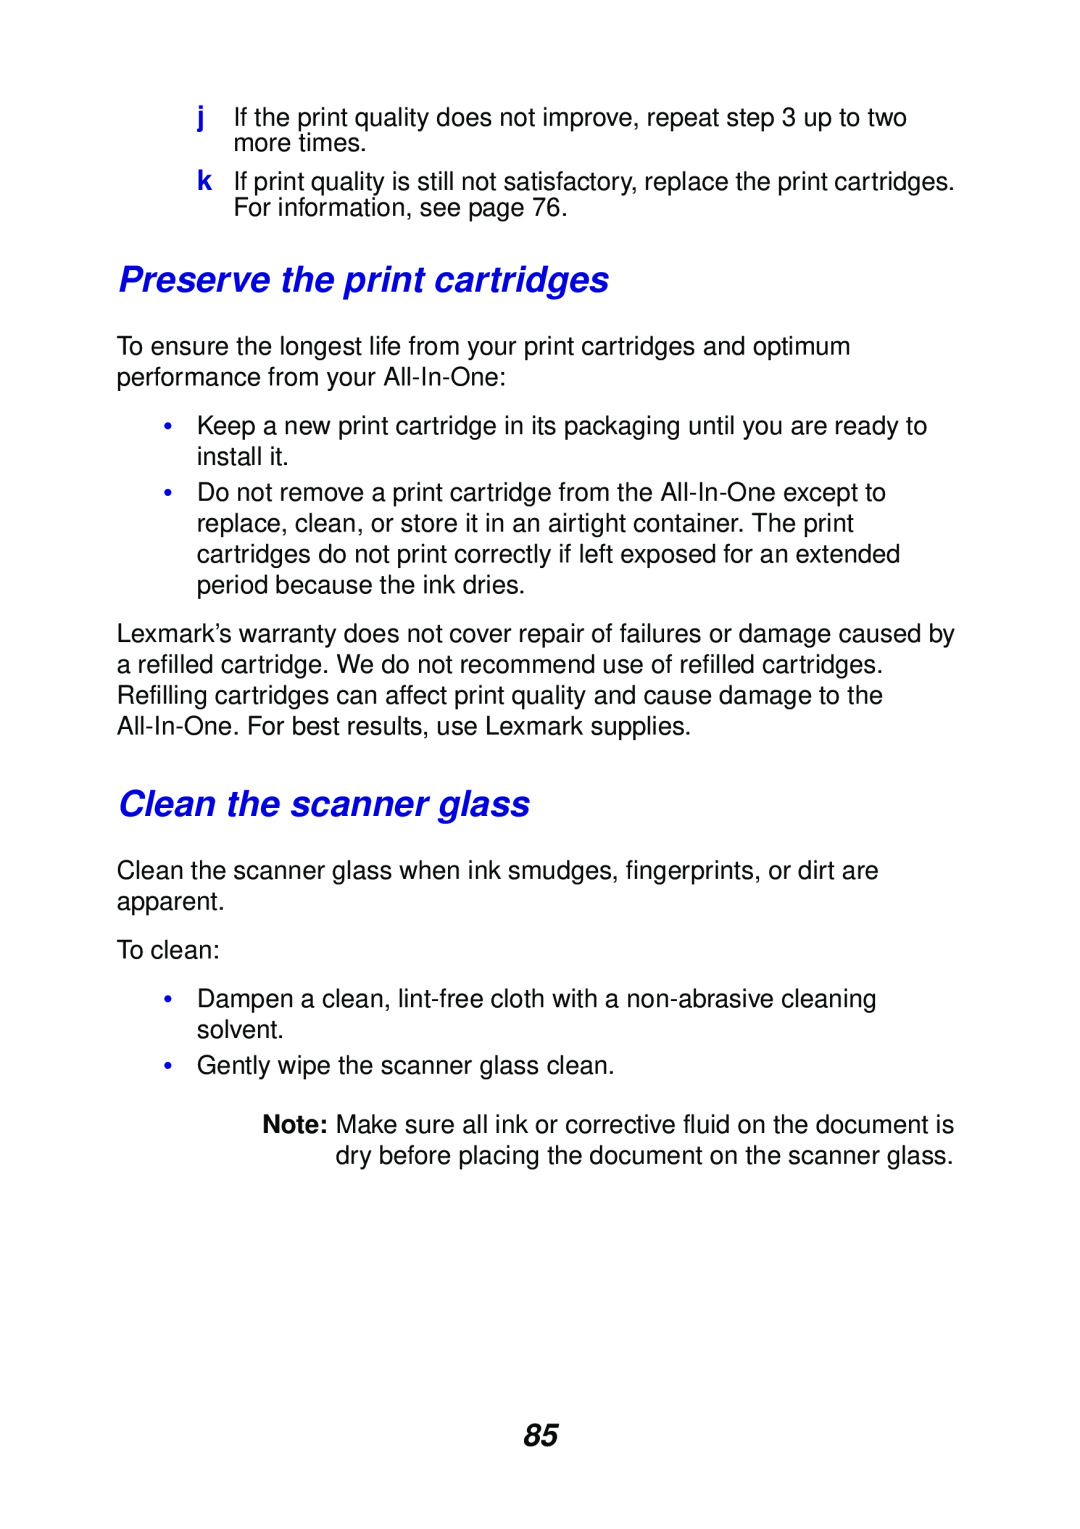 Lexmark X6100 manual Preserve the print cartridges, Clean the scanner glass 